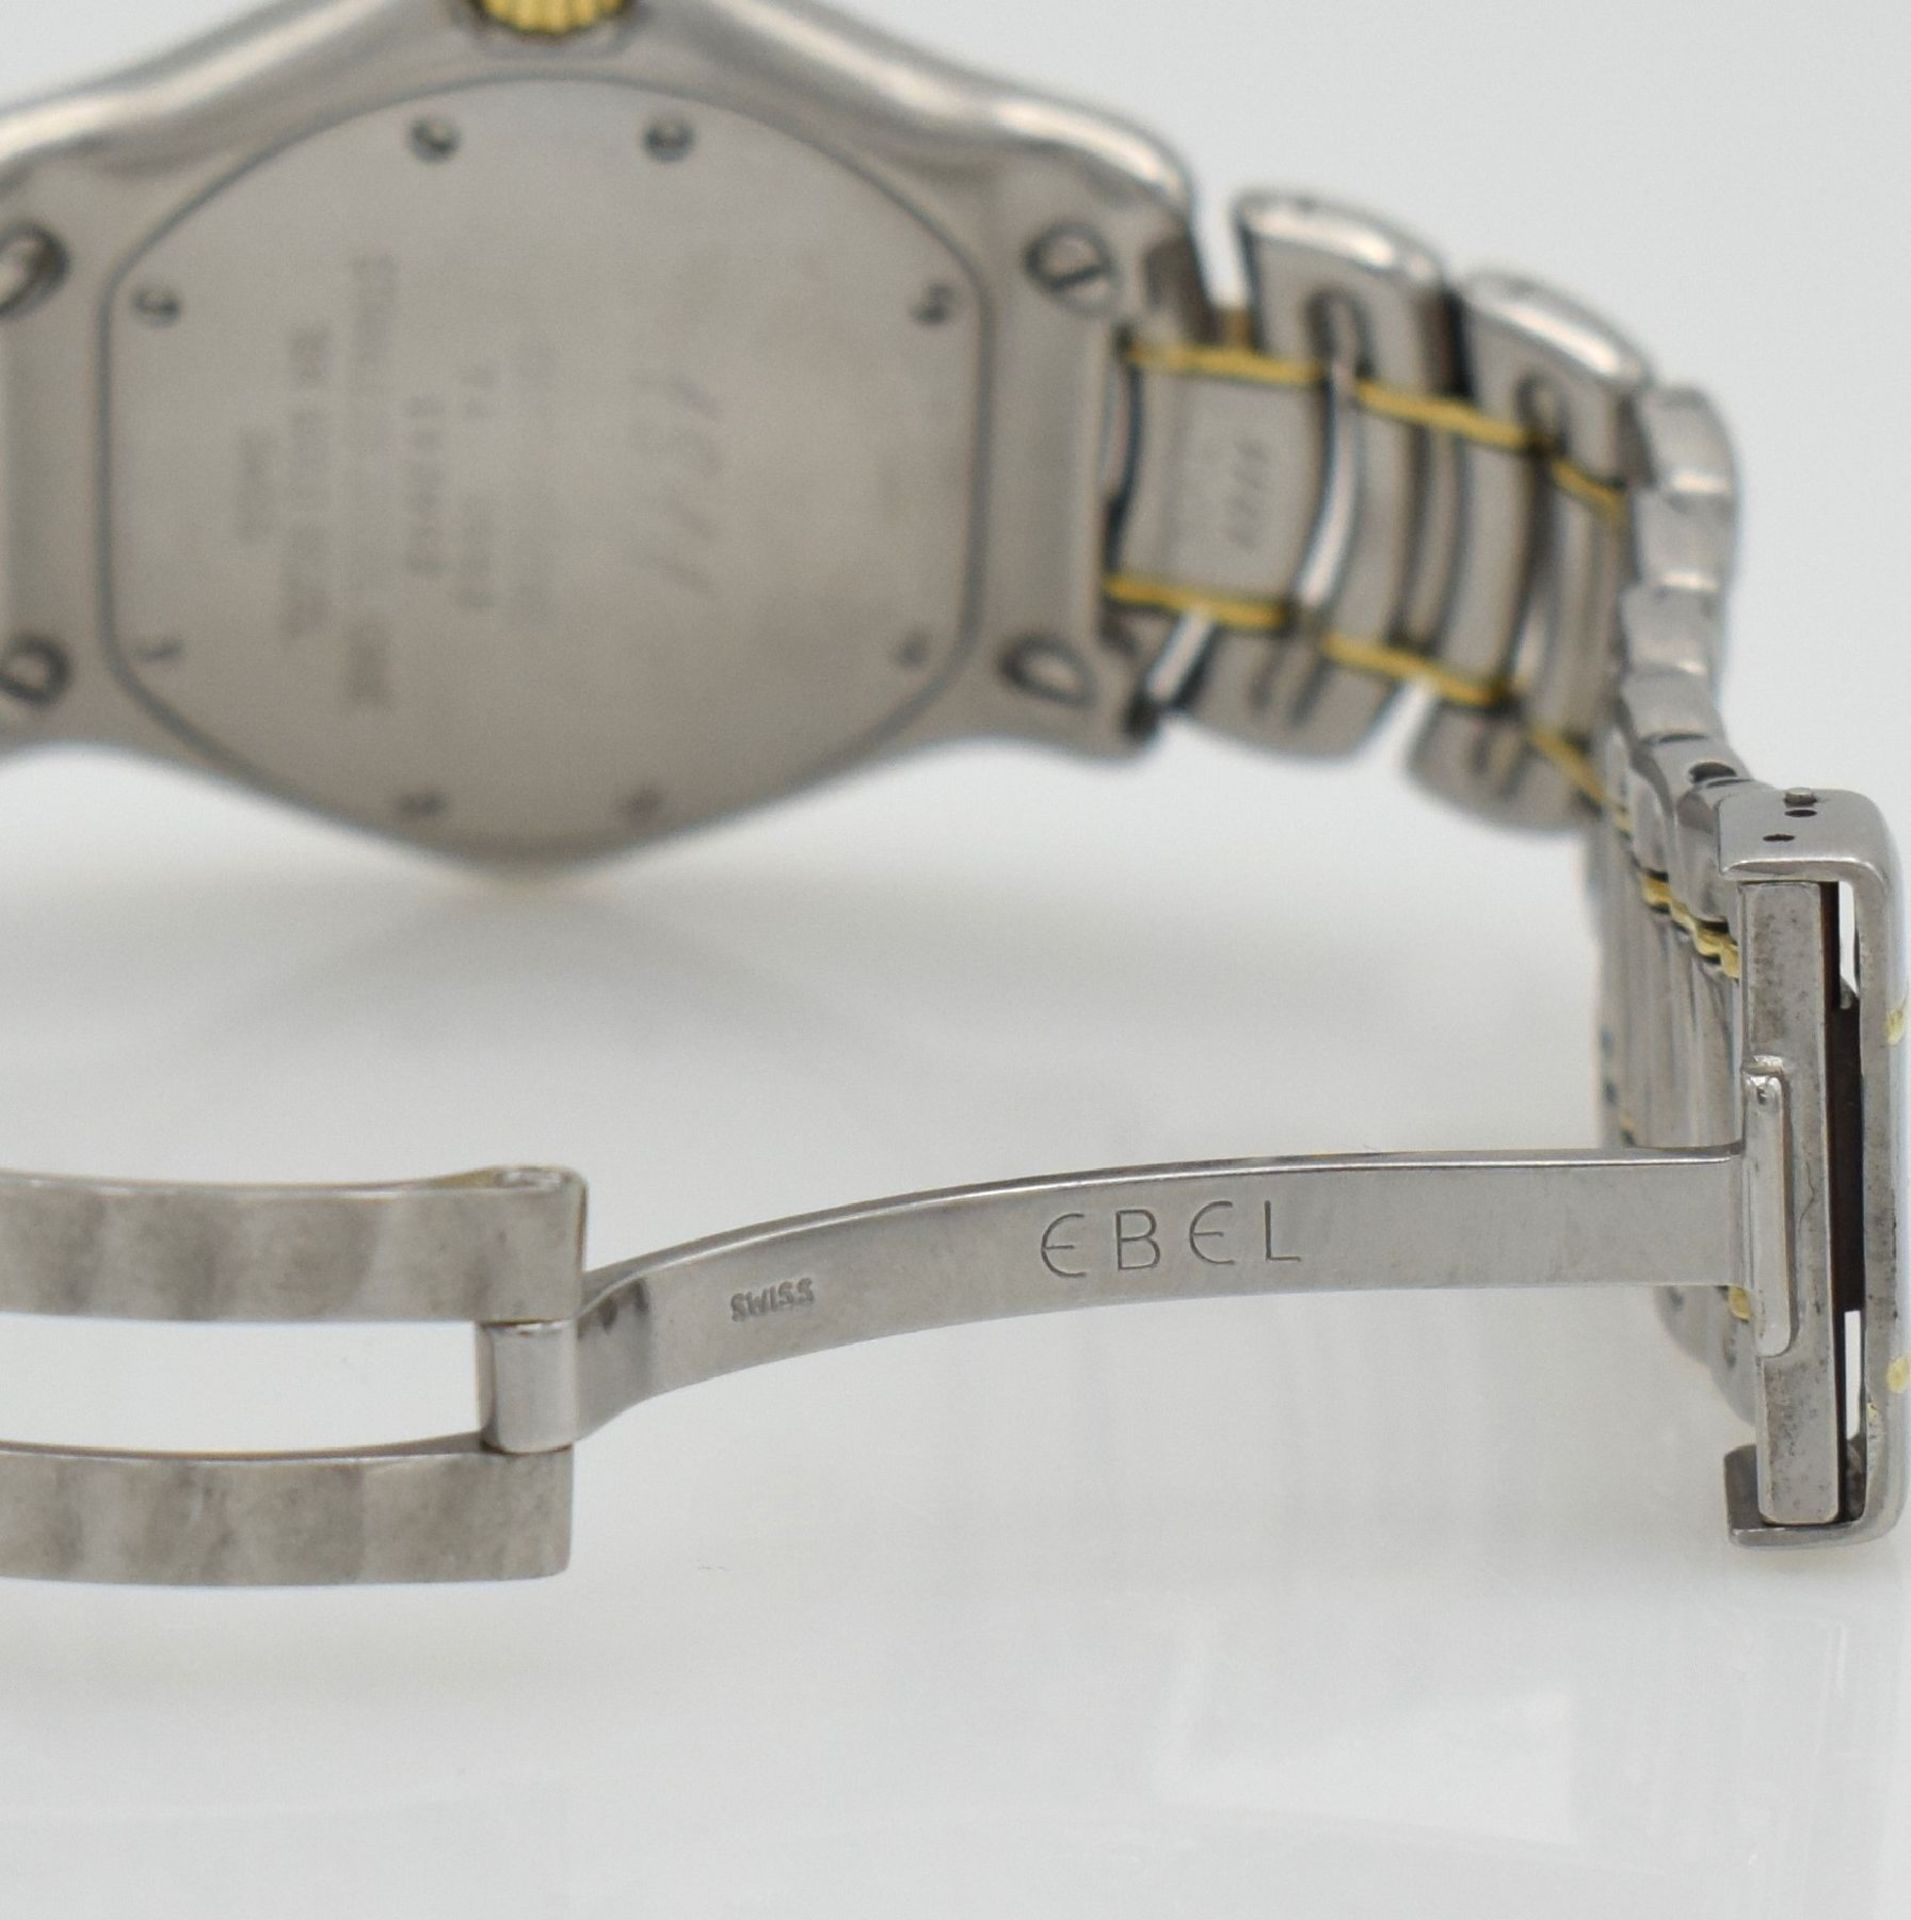 EBEL 1911 wristwatch in stainless steel/gold, Switzerland sold according to warranty card inMay - Bild 6 aus 10